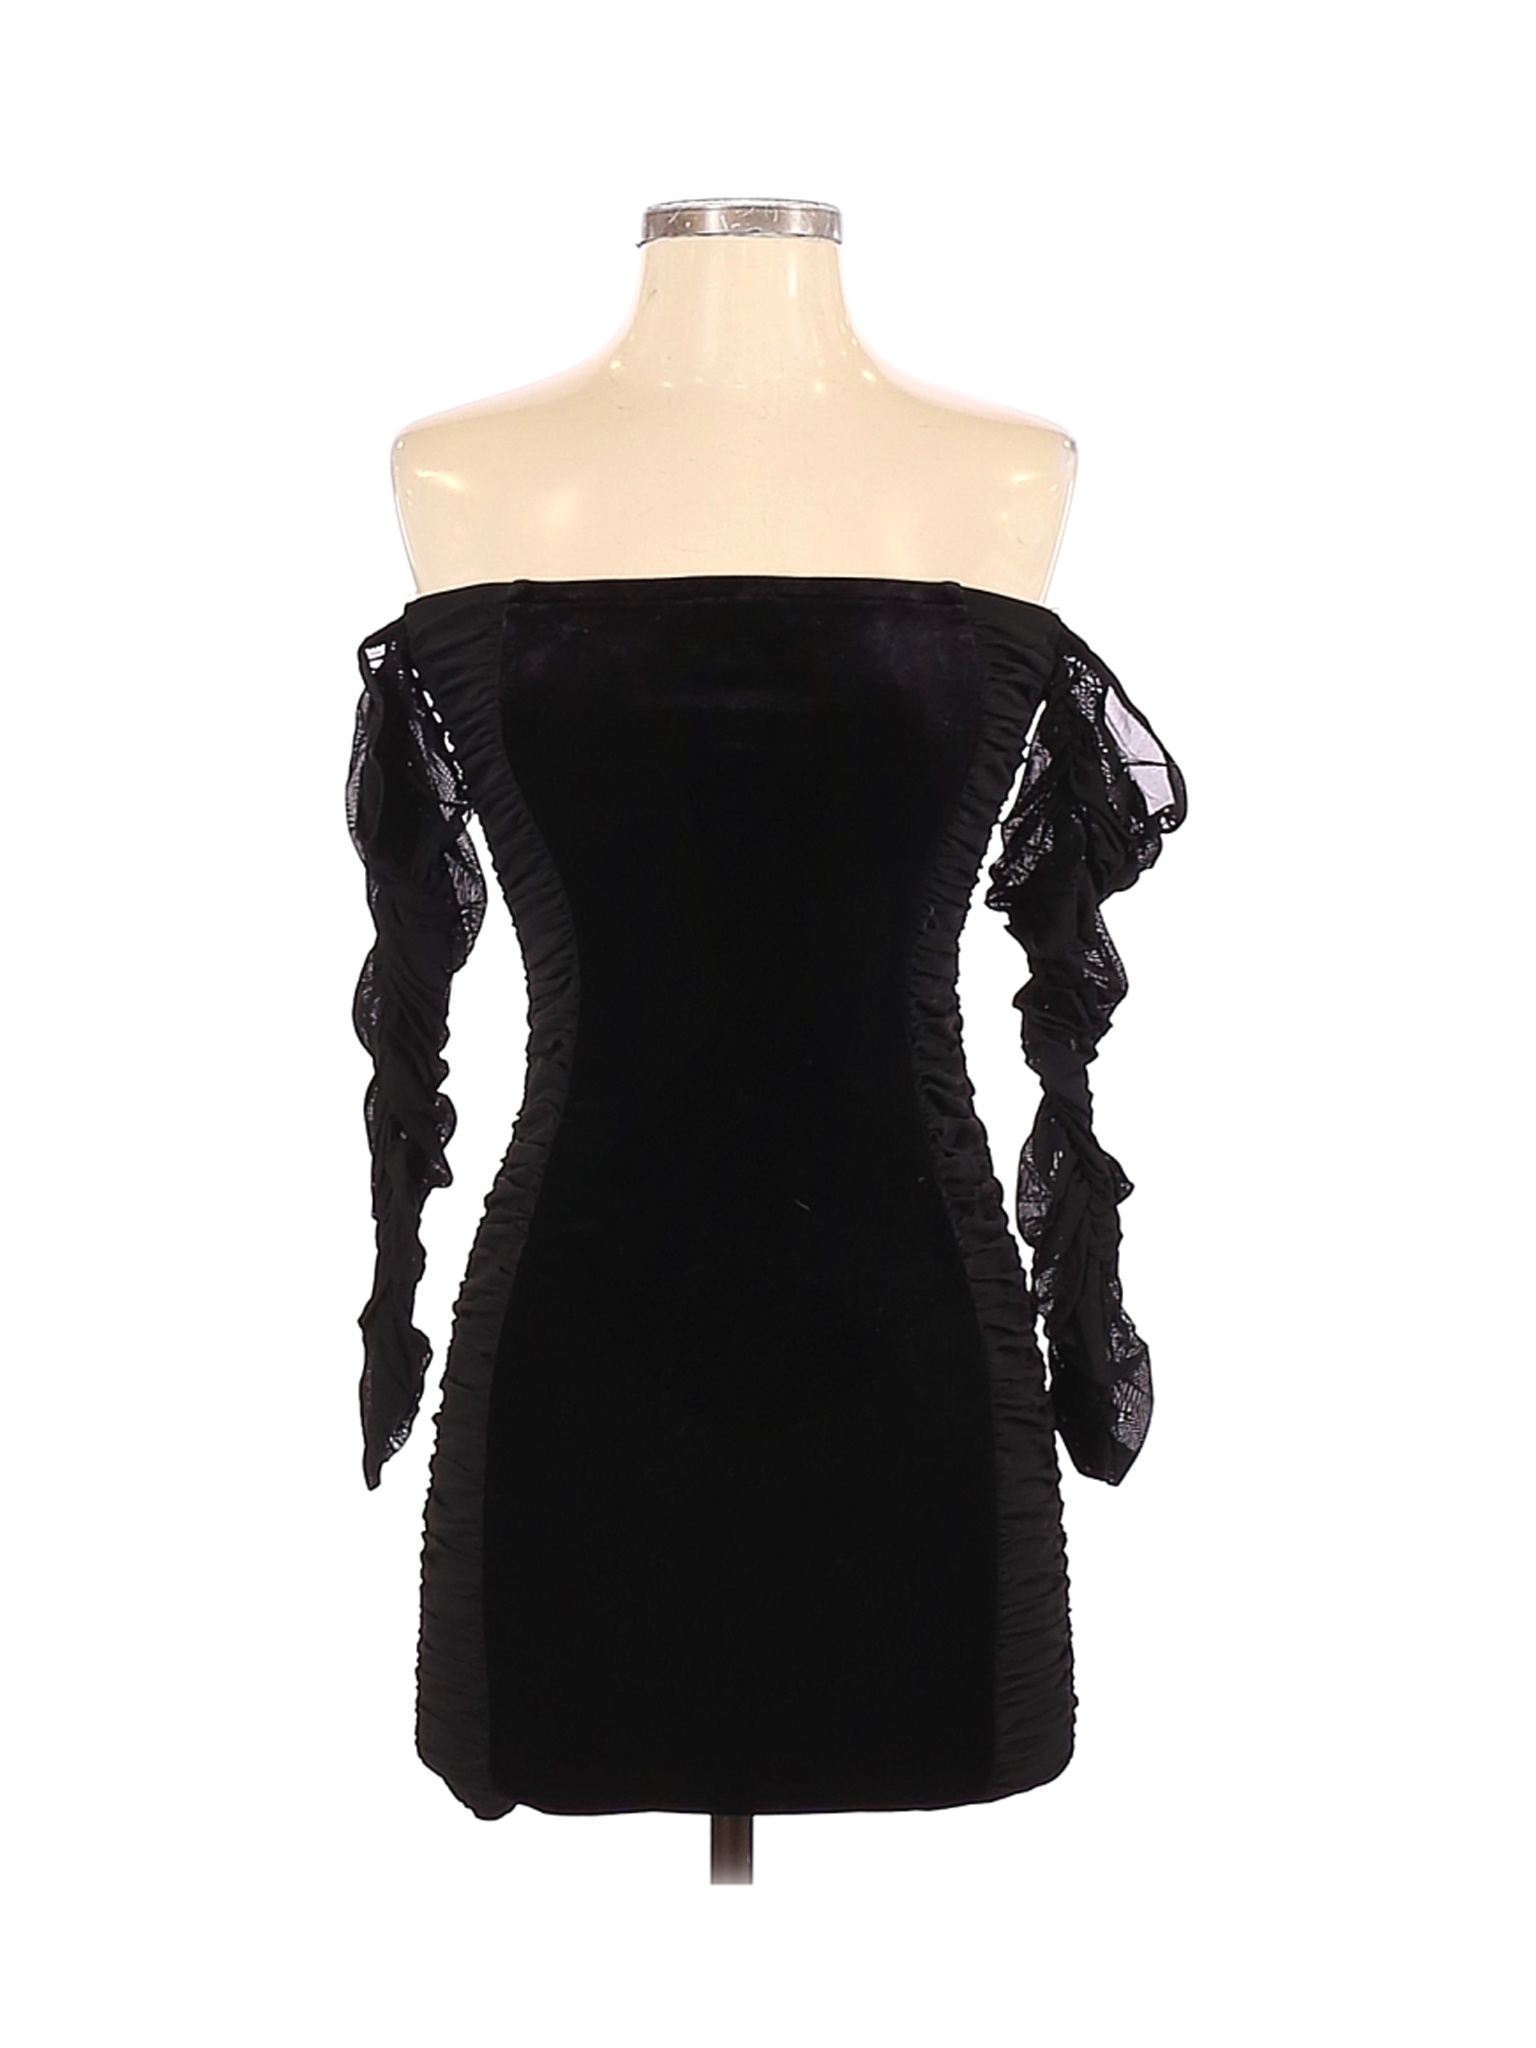 Privy Women Black Cocktail Dress S | eBay